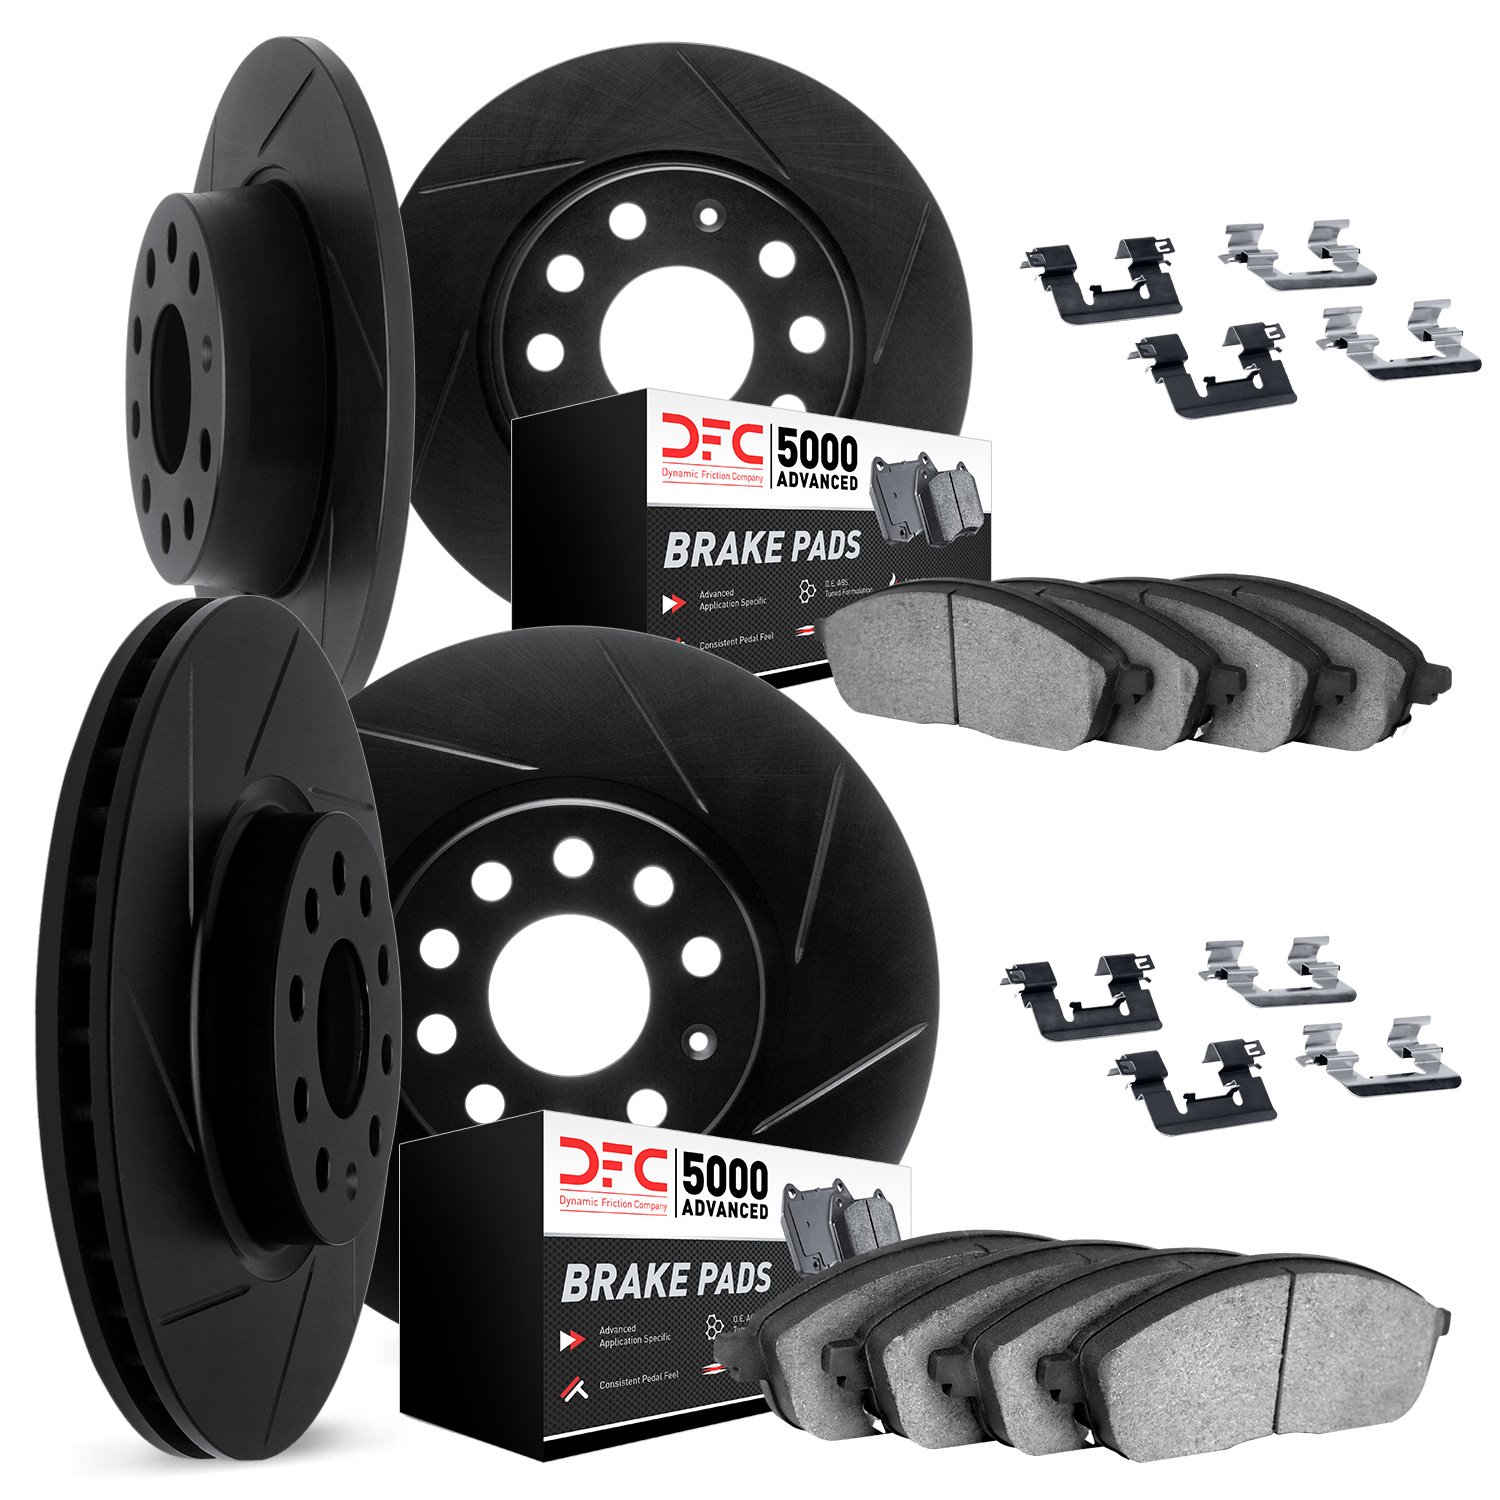 3514-80036 Slotted Brake Rotors w/5000 Advanced Brake Pads Kit & Hardware [Black], 2013-2015 Ford/Lincoln/Mercury/Mazda, Positio